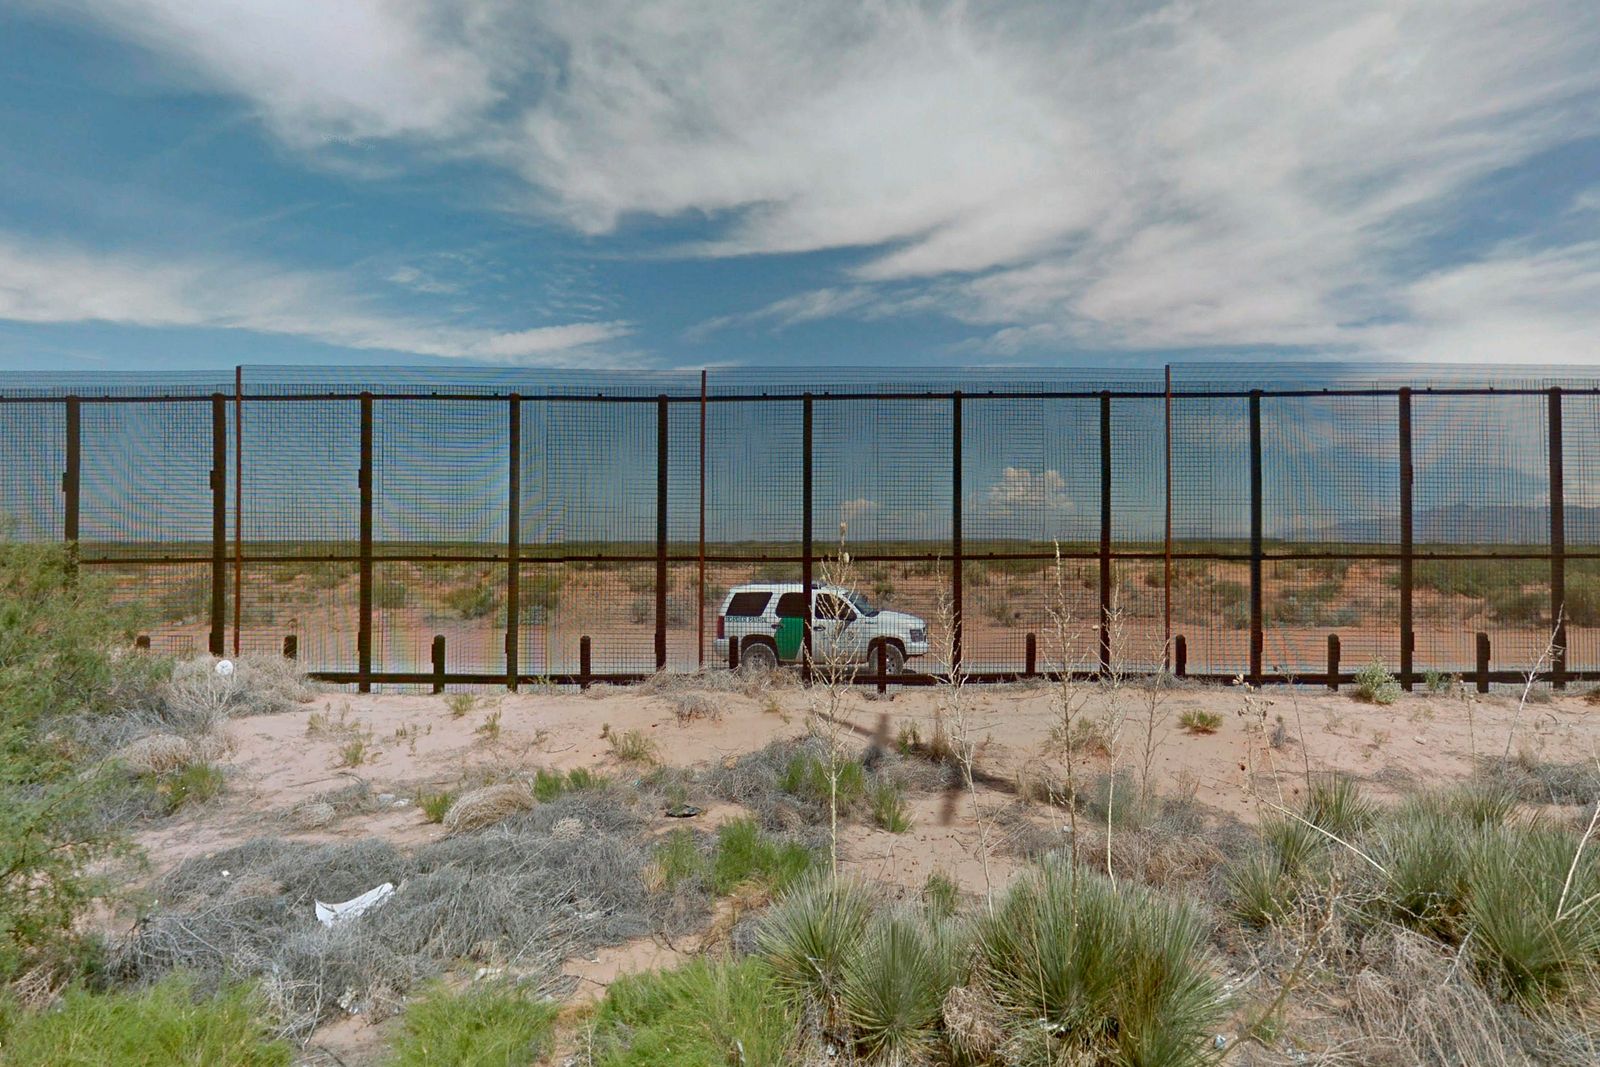 © Alejandro "Luperca" Morales - Carretera Anapra - San Jerónimo. A CBP vehicle next to the border wall near Anapra.